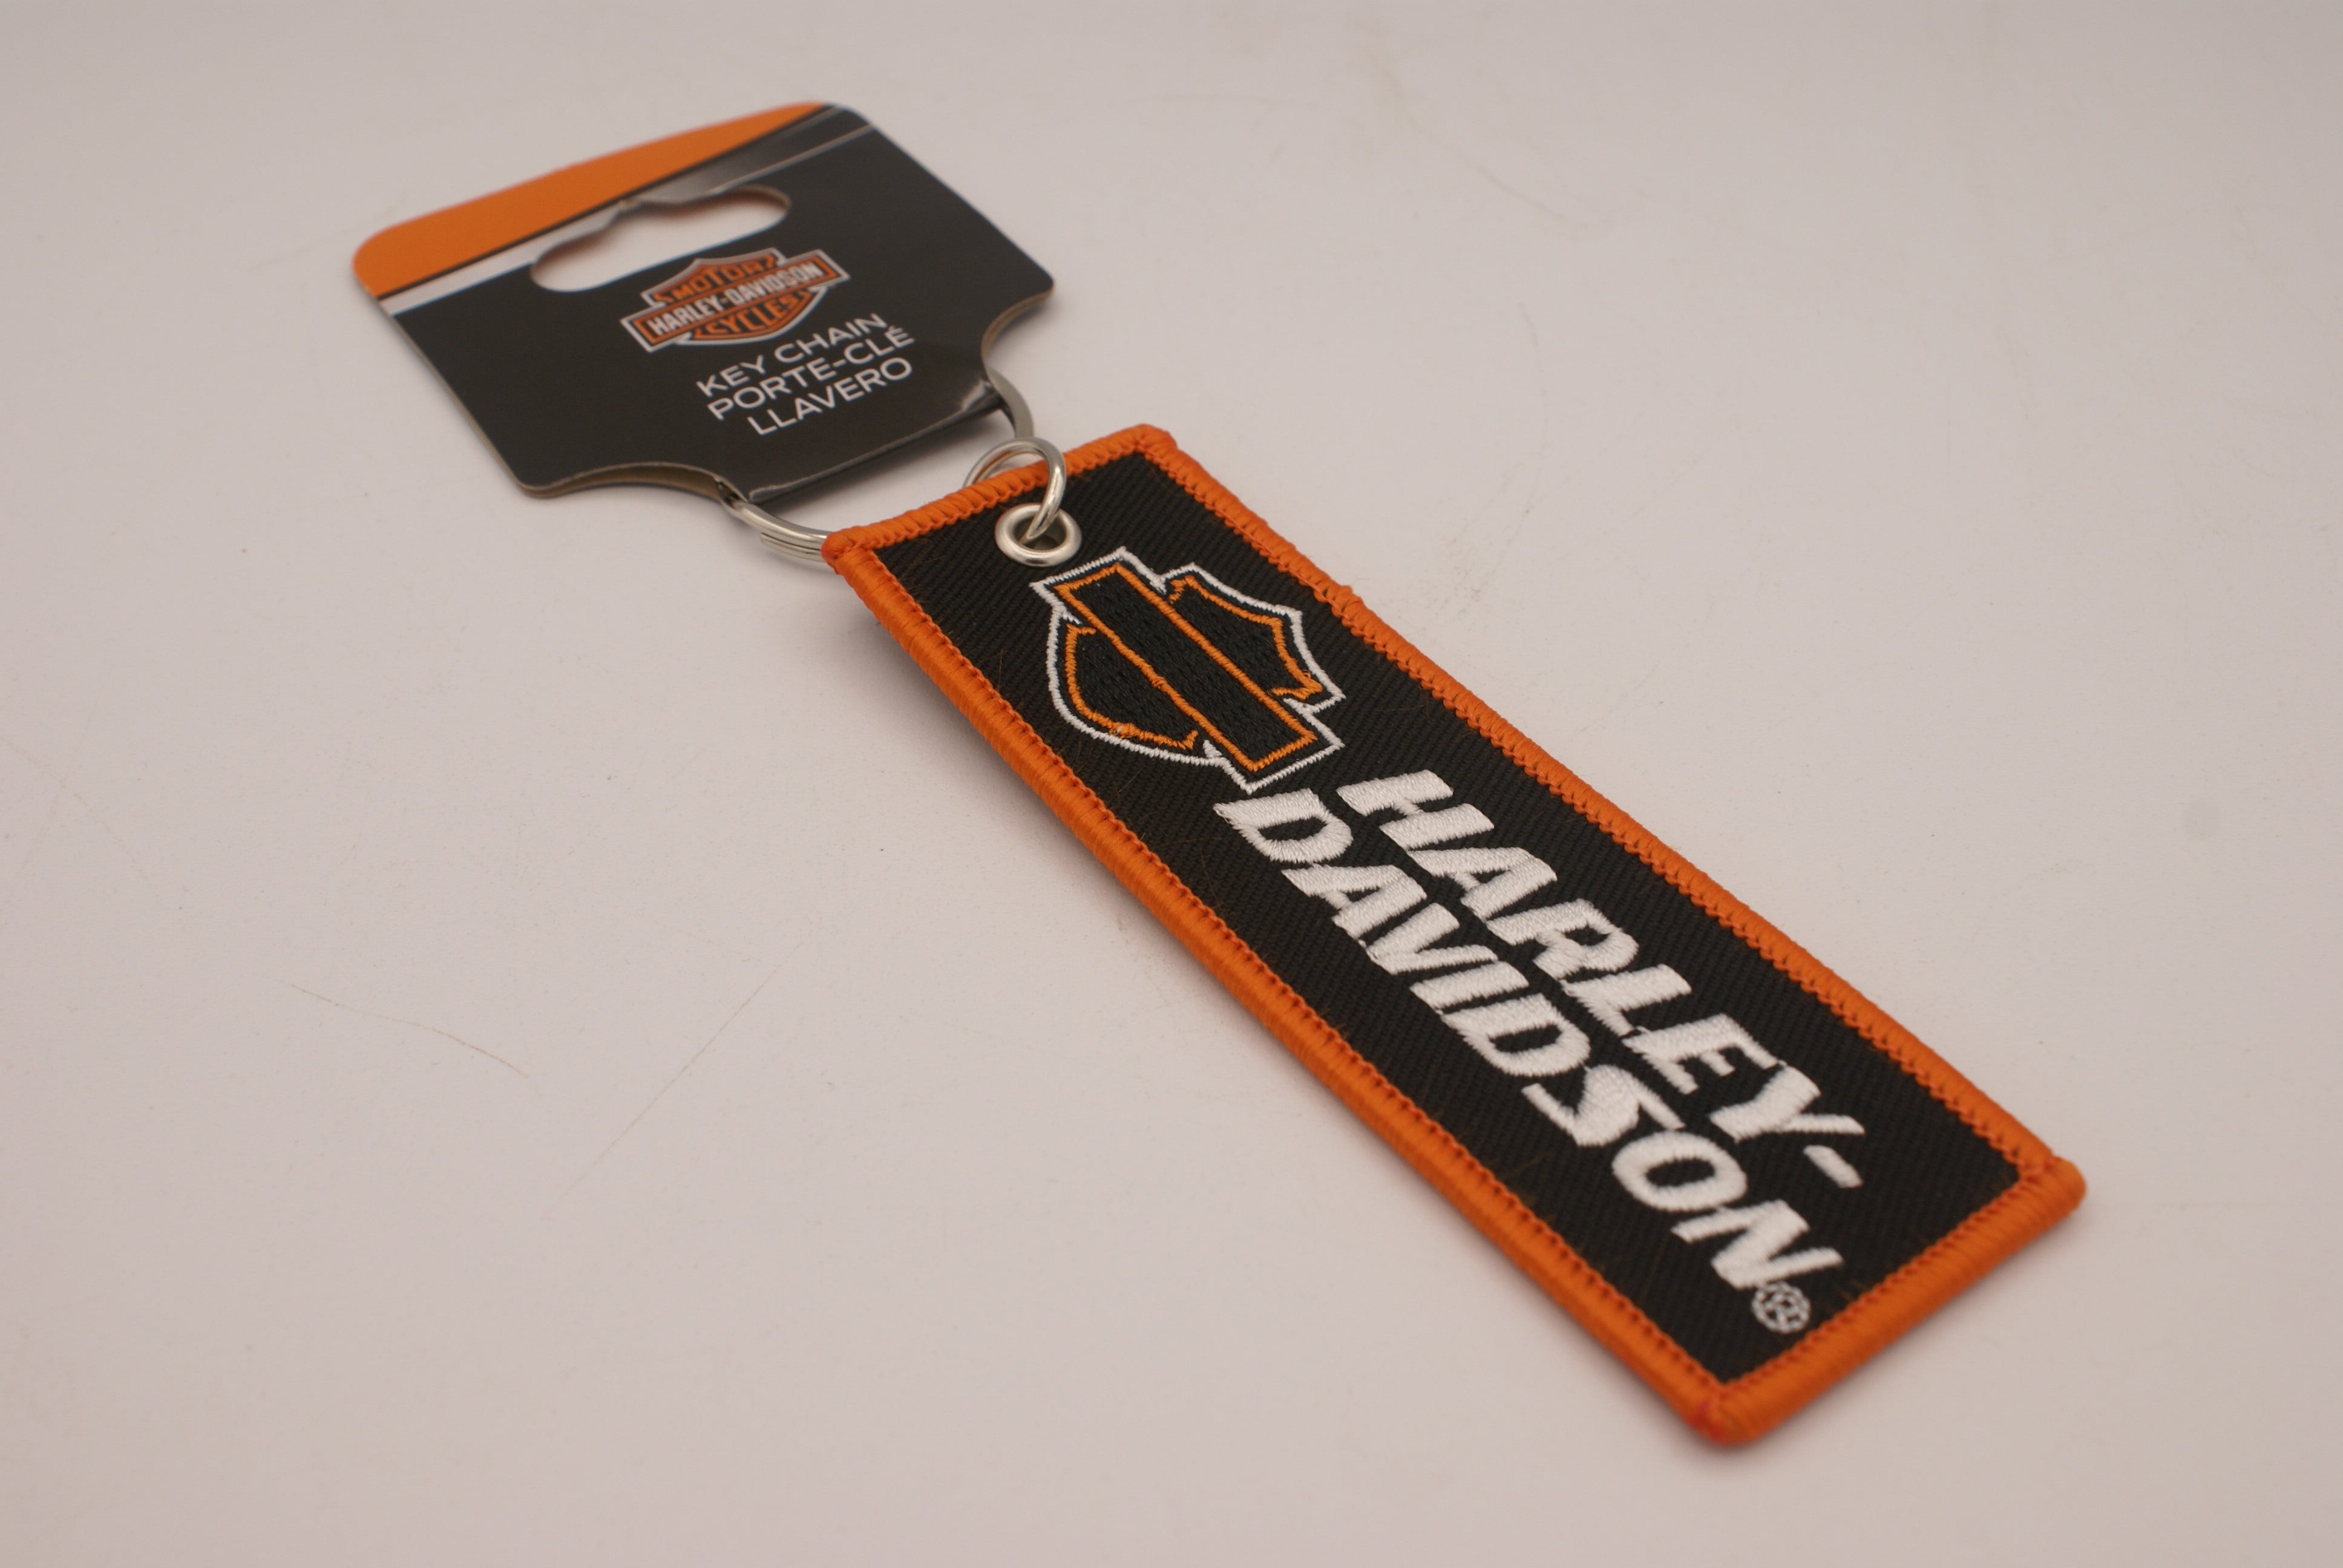 Harley-Davidson porte-clé KEYCHAIN Number #1 USA